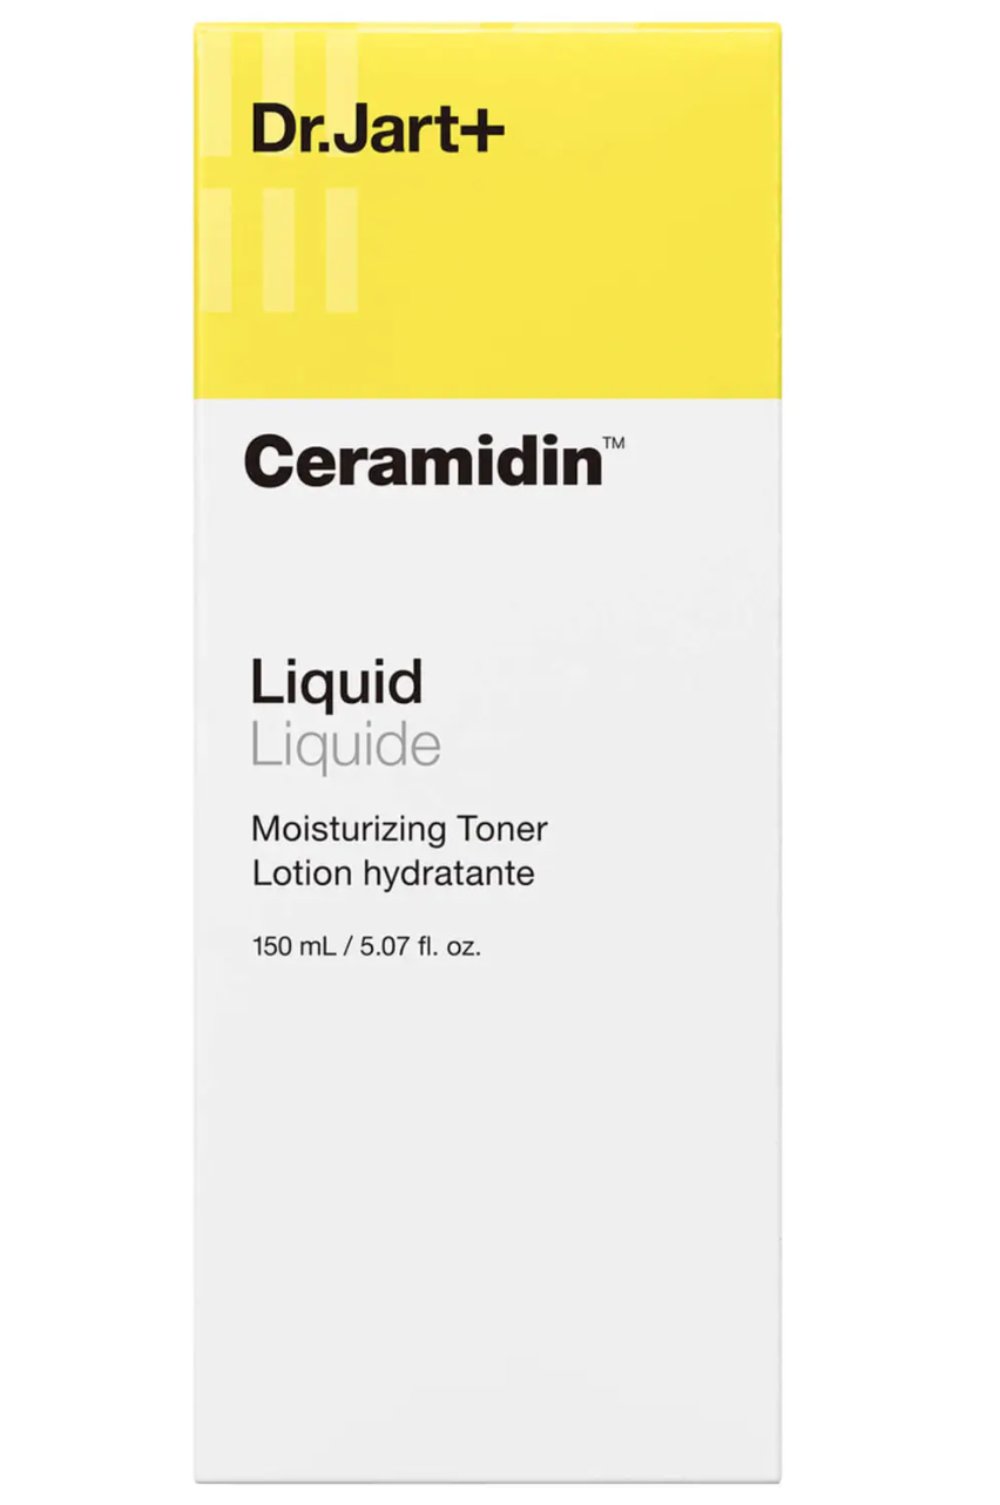 Dr. Jart+ Ceramidin Liquid 150ml - The Face Method